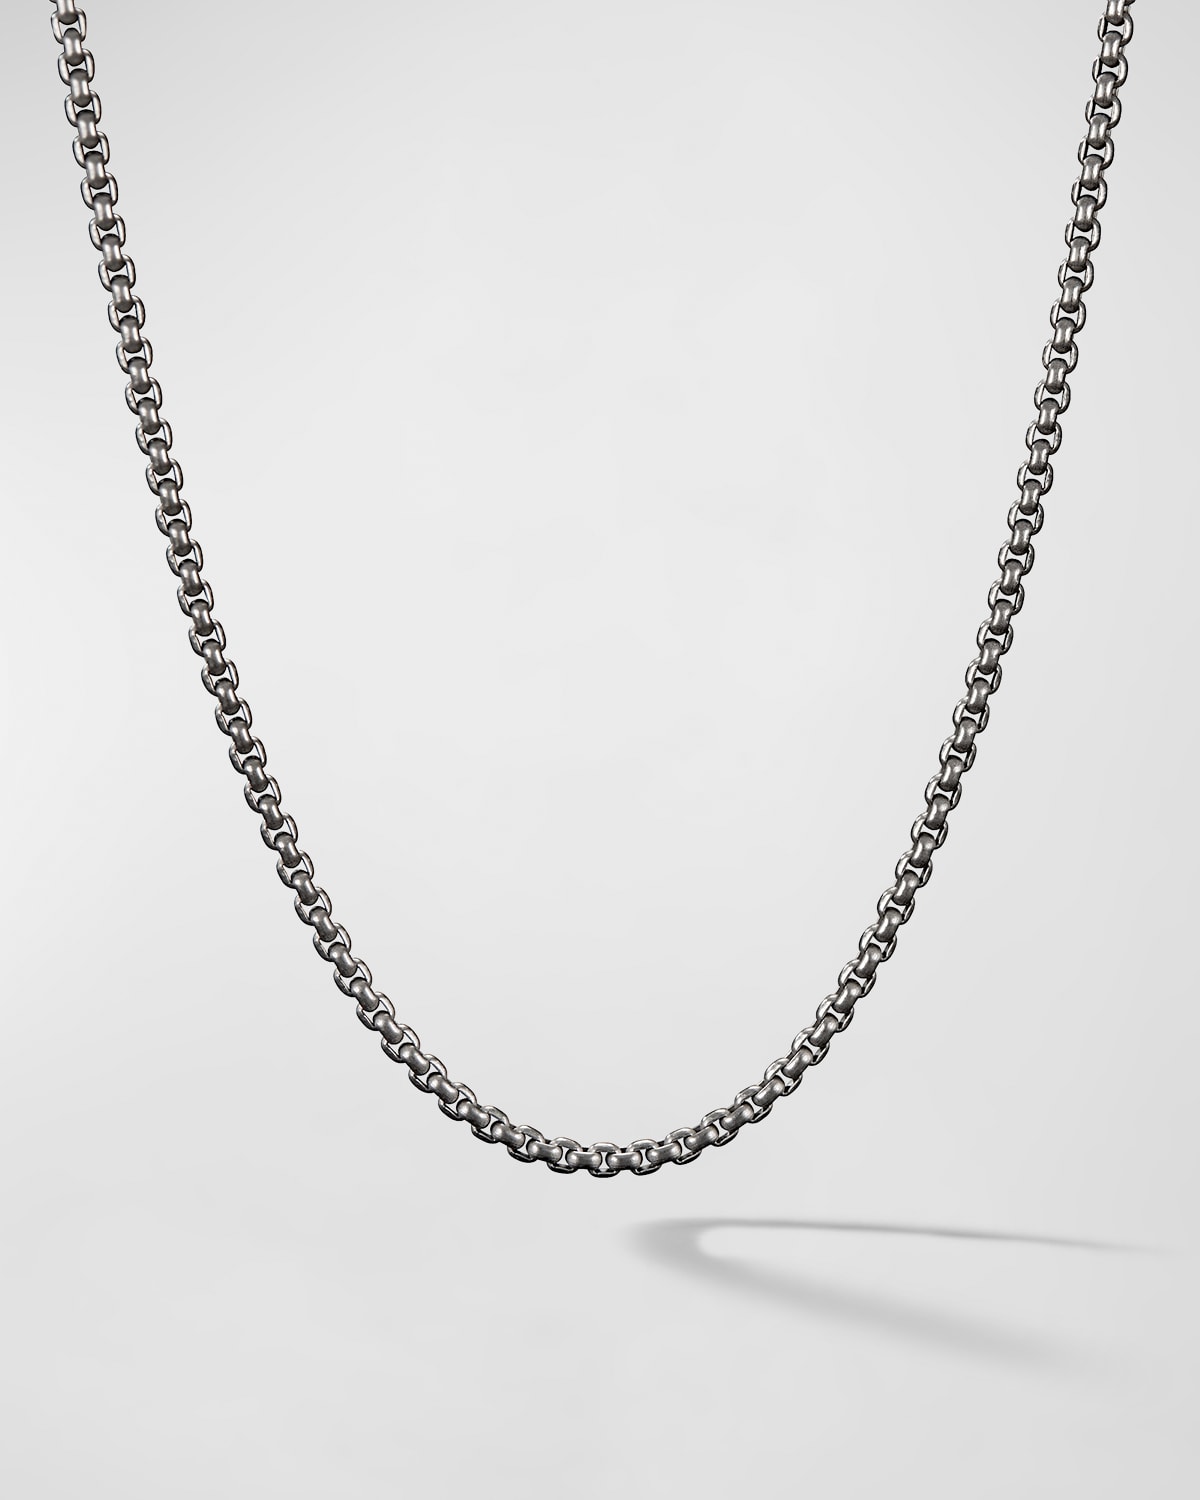 Men's Box Chain Necklace in Grey Titanium, 2.7mm, 22"L